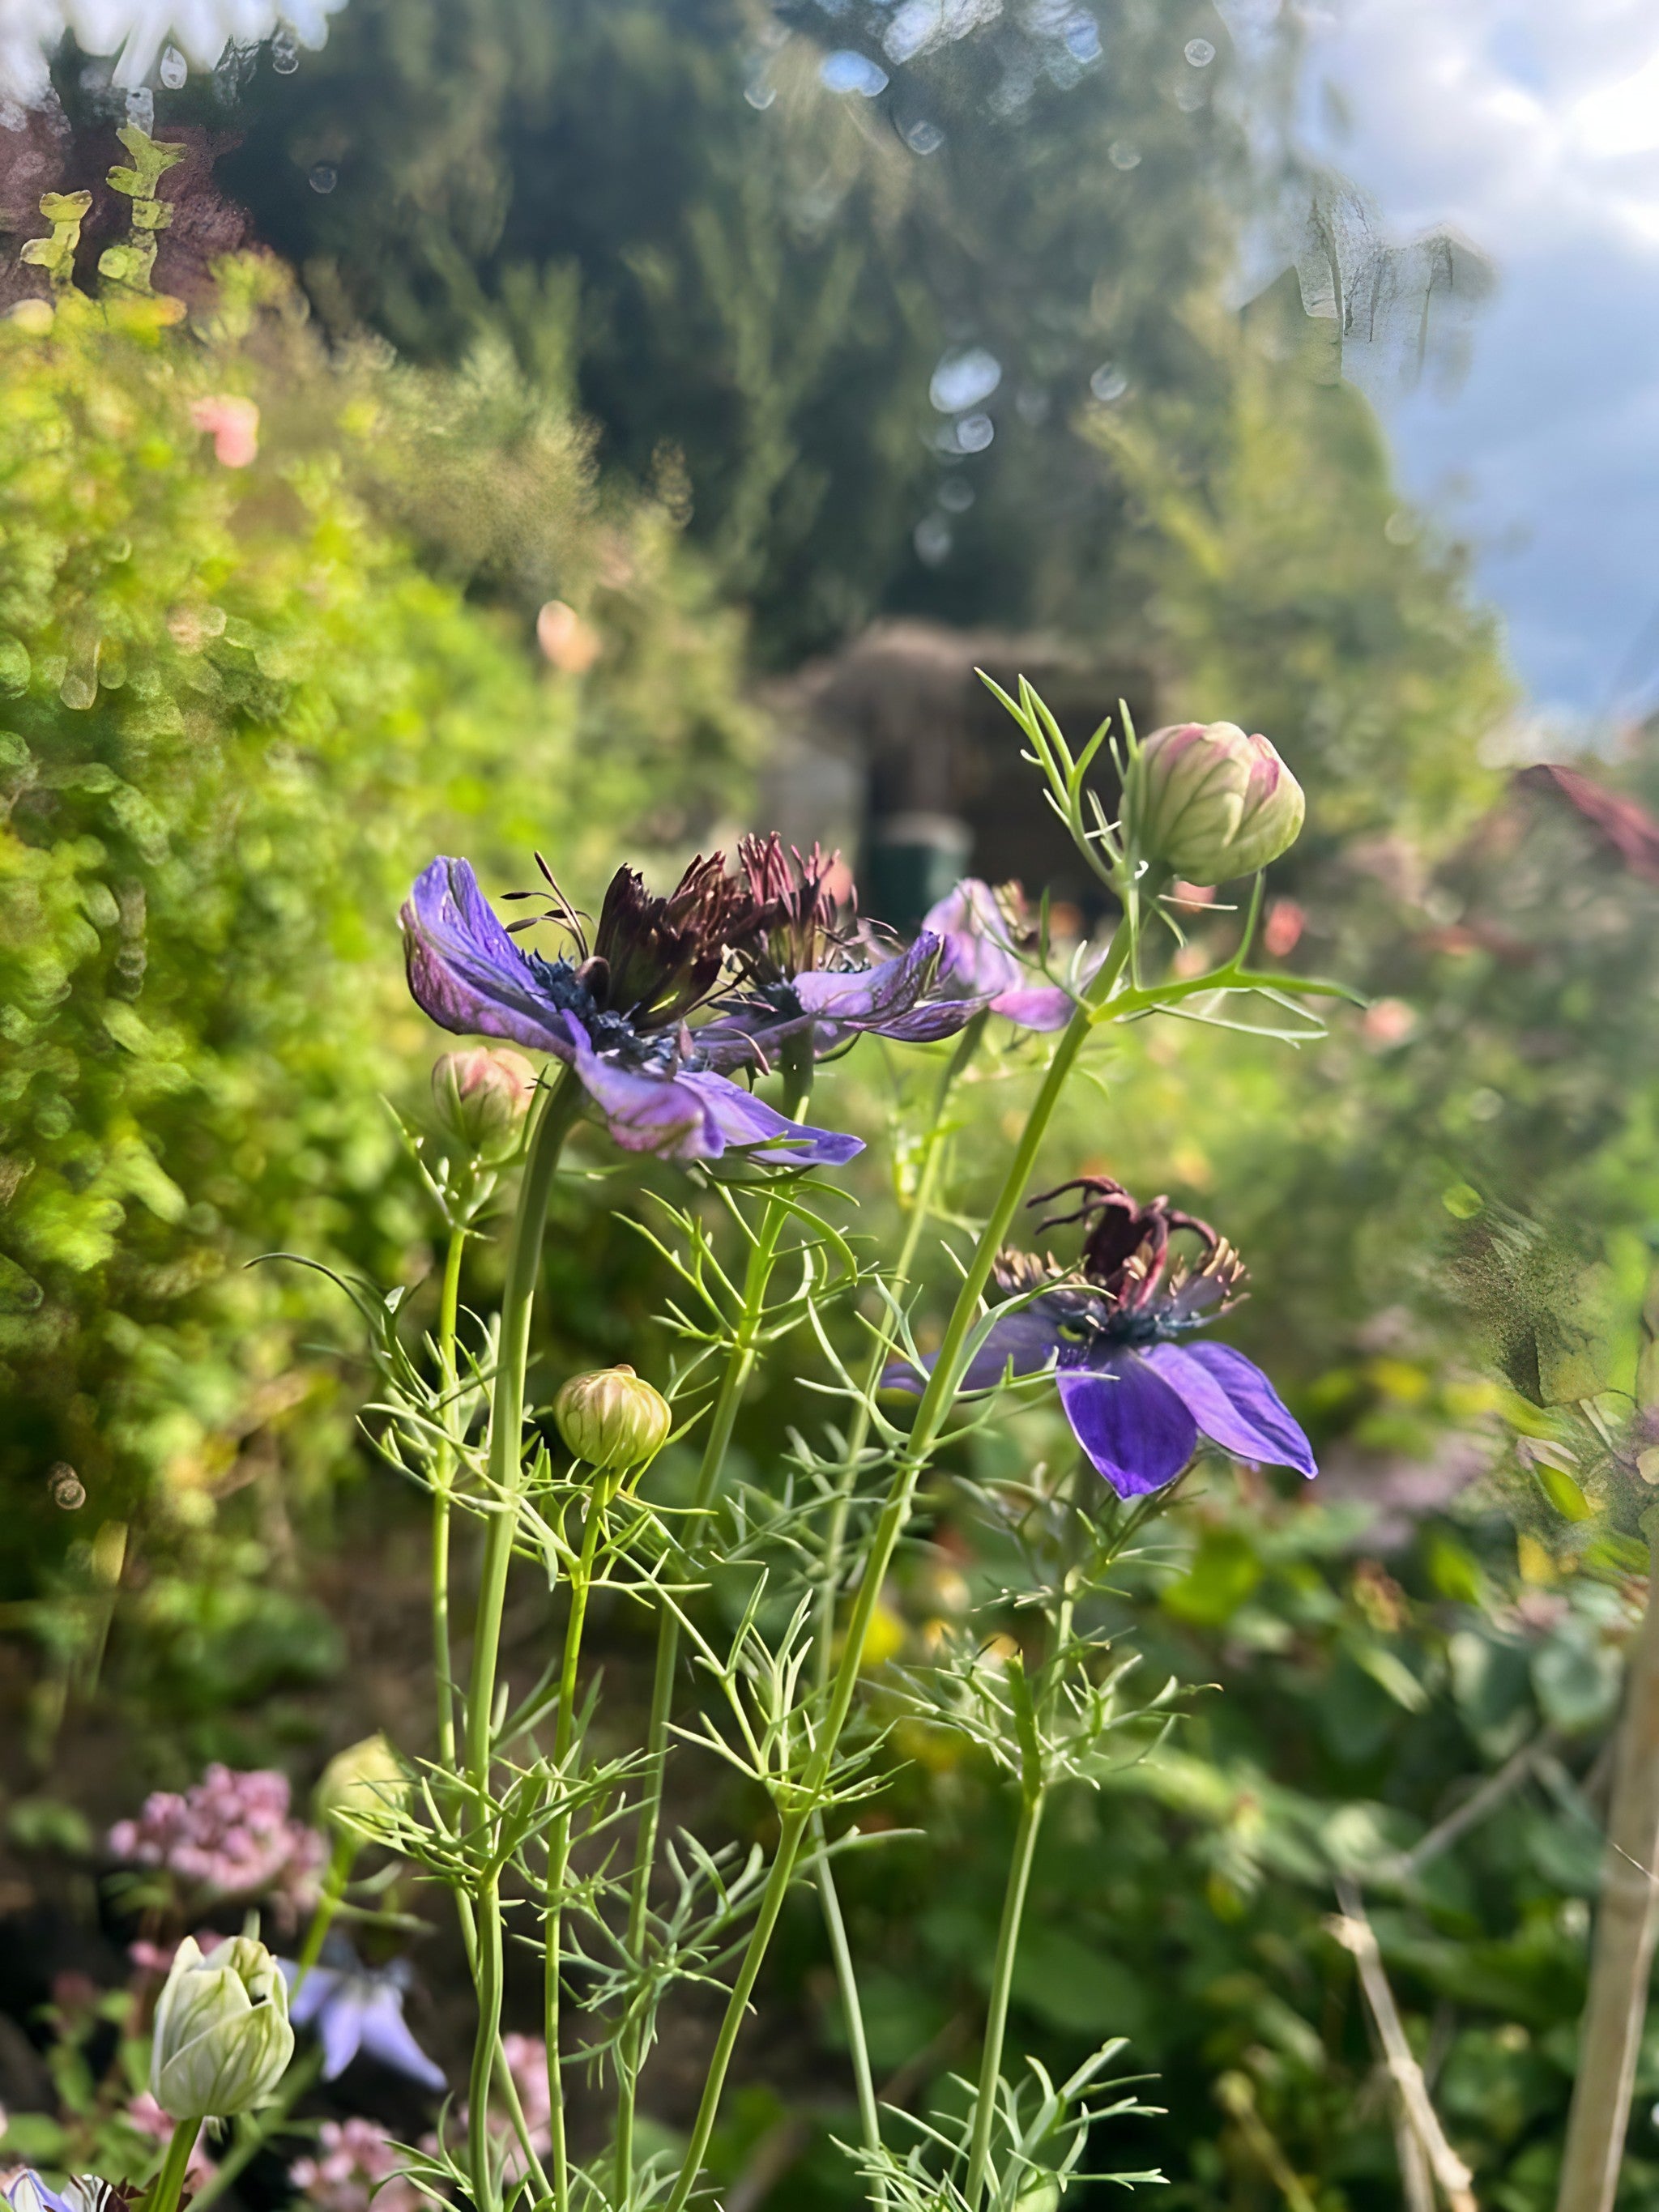 Nigella Hispanica attracting a bee in the garden